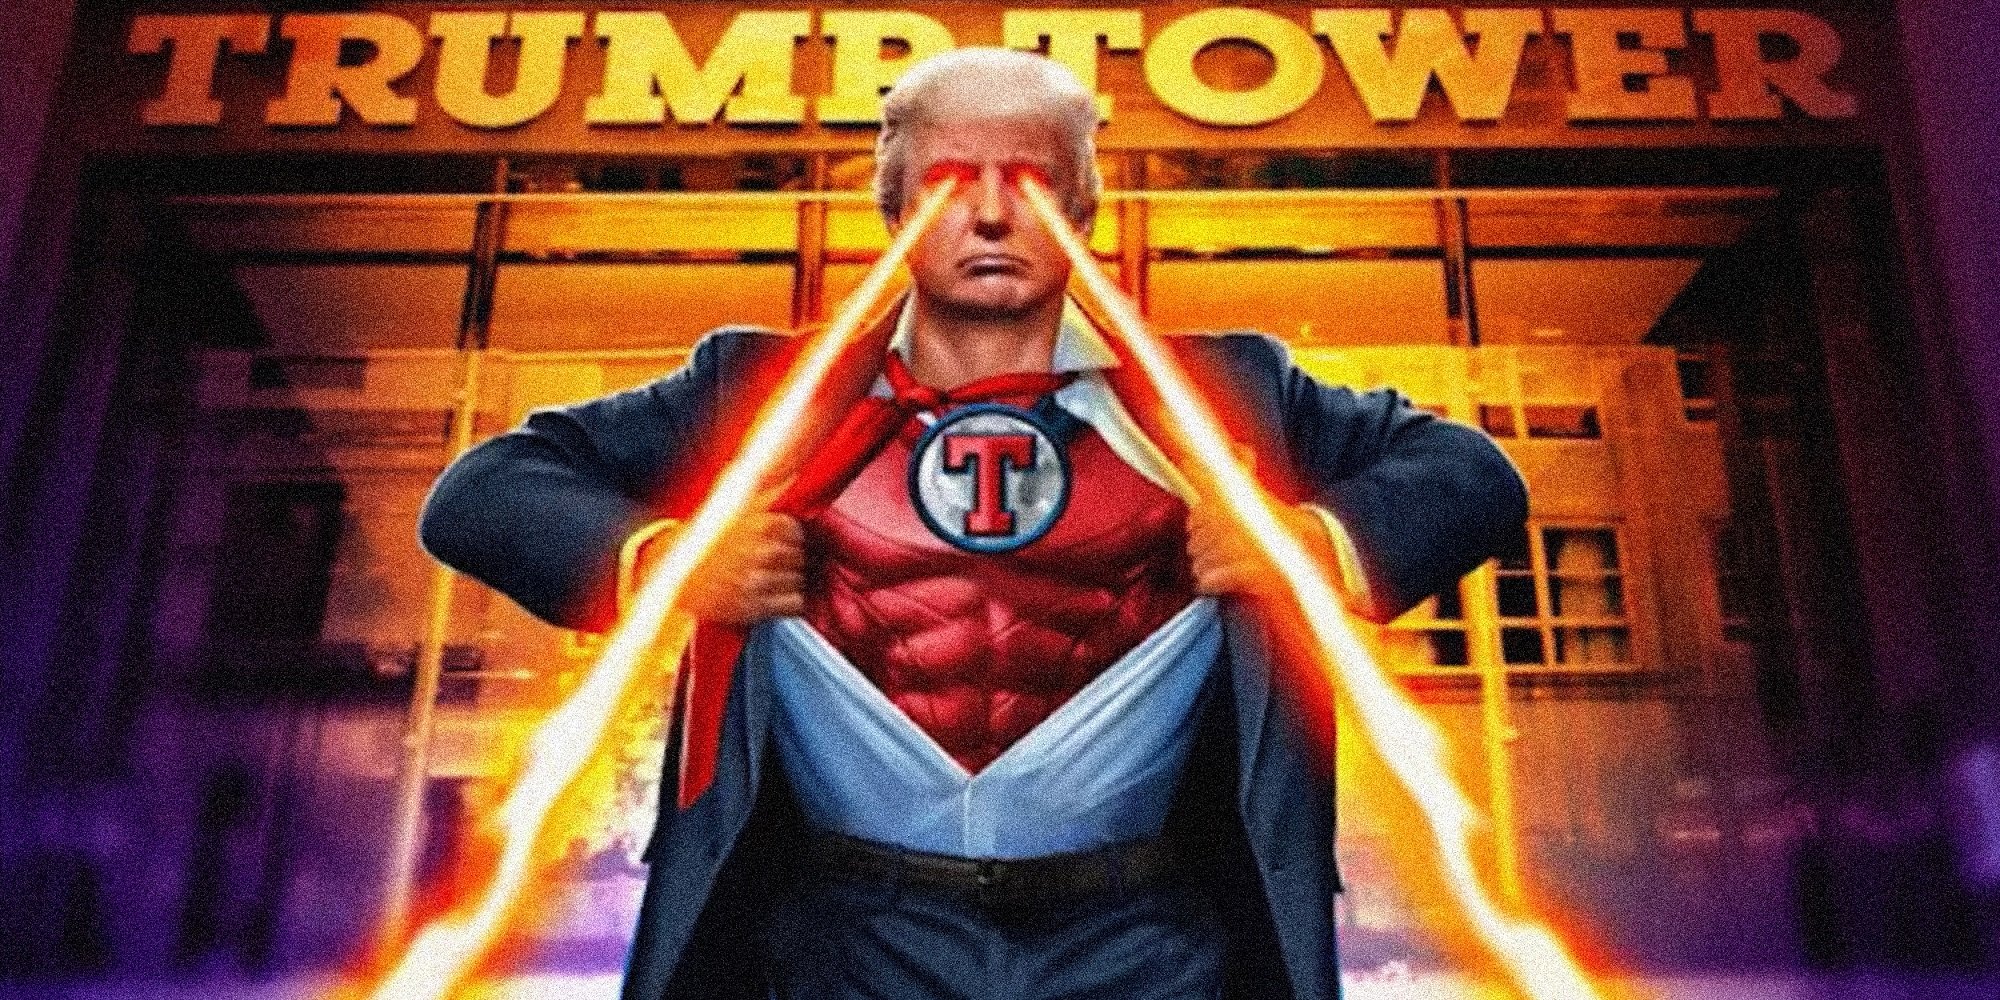 Donald Trump trading card depicting him as superhero